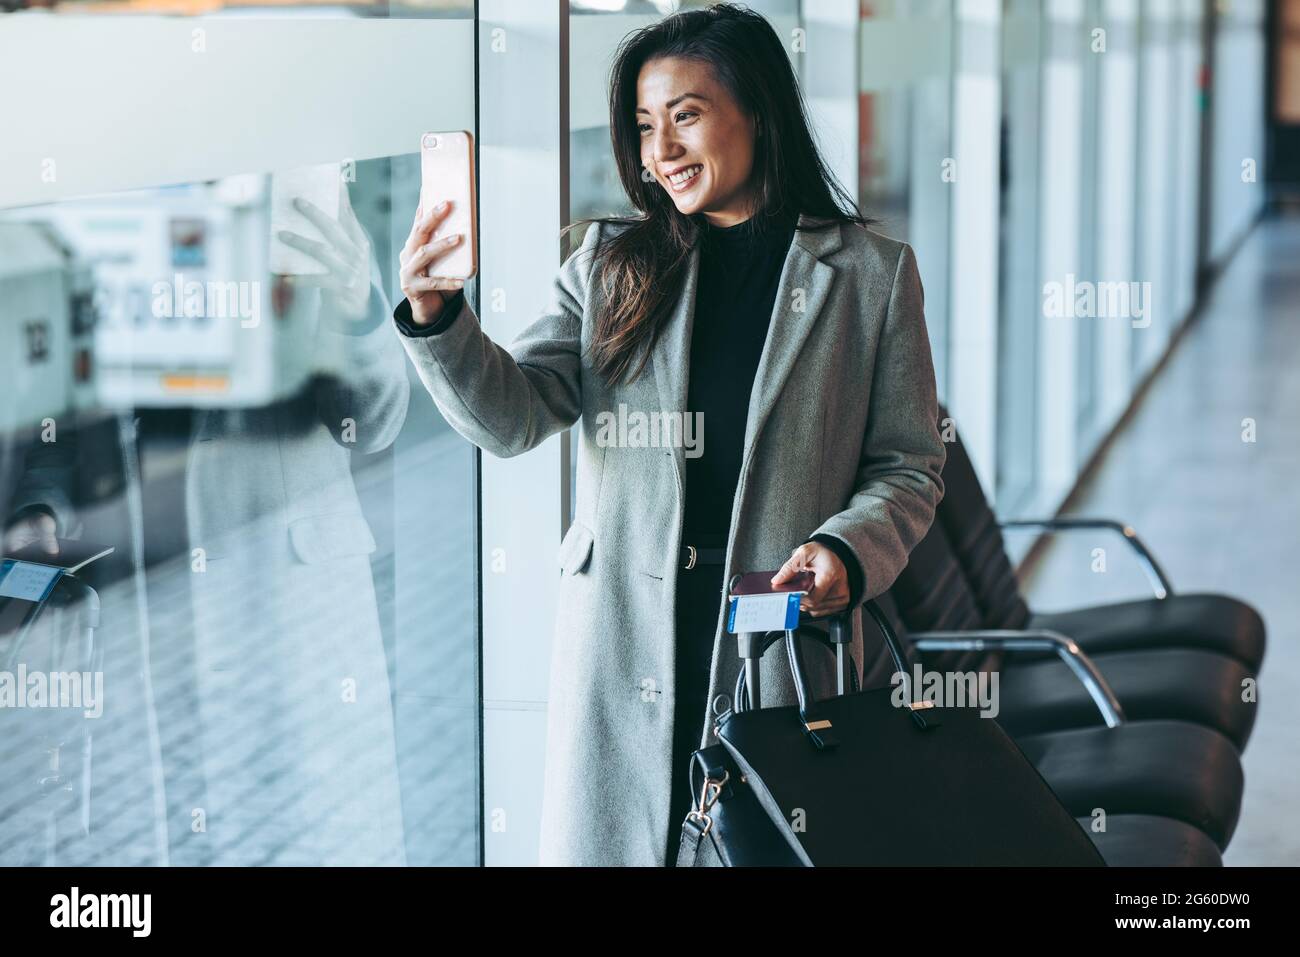 Woman traveler at airport terminal taking selfie. Woman passenger at ...